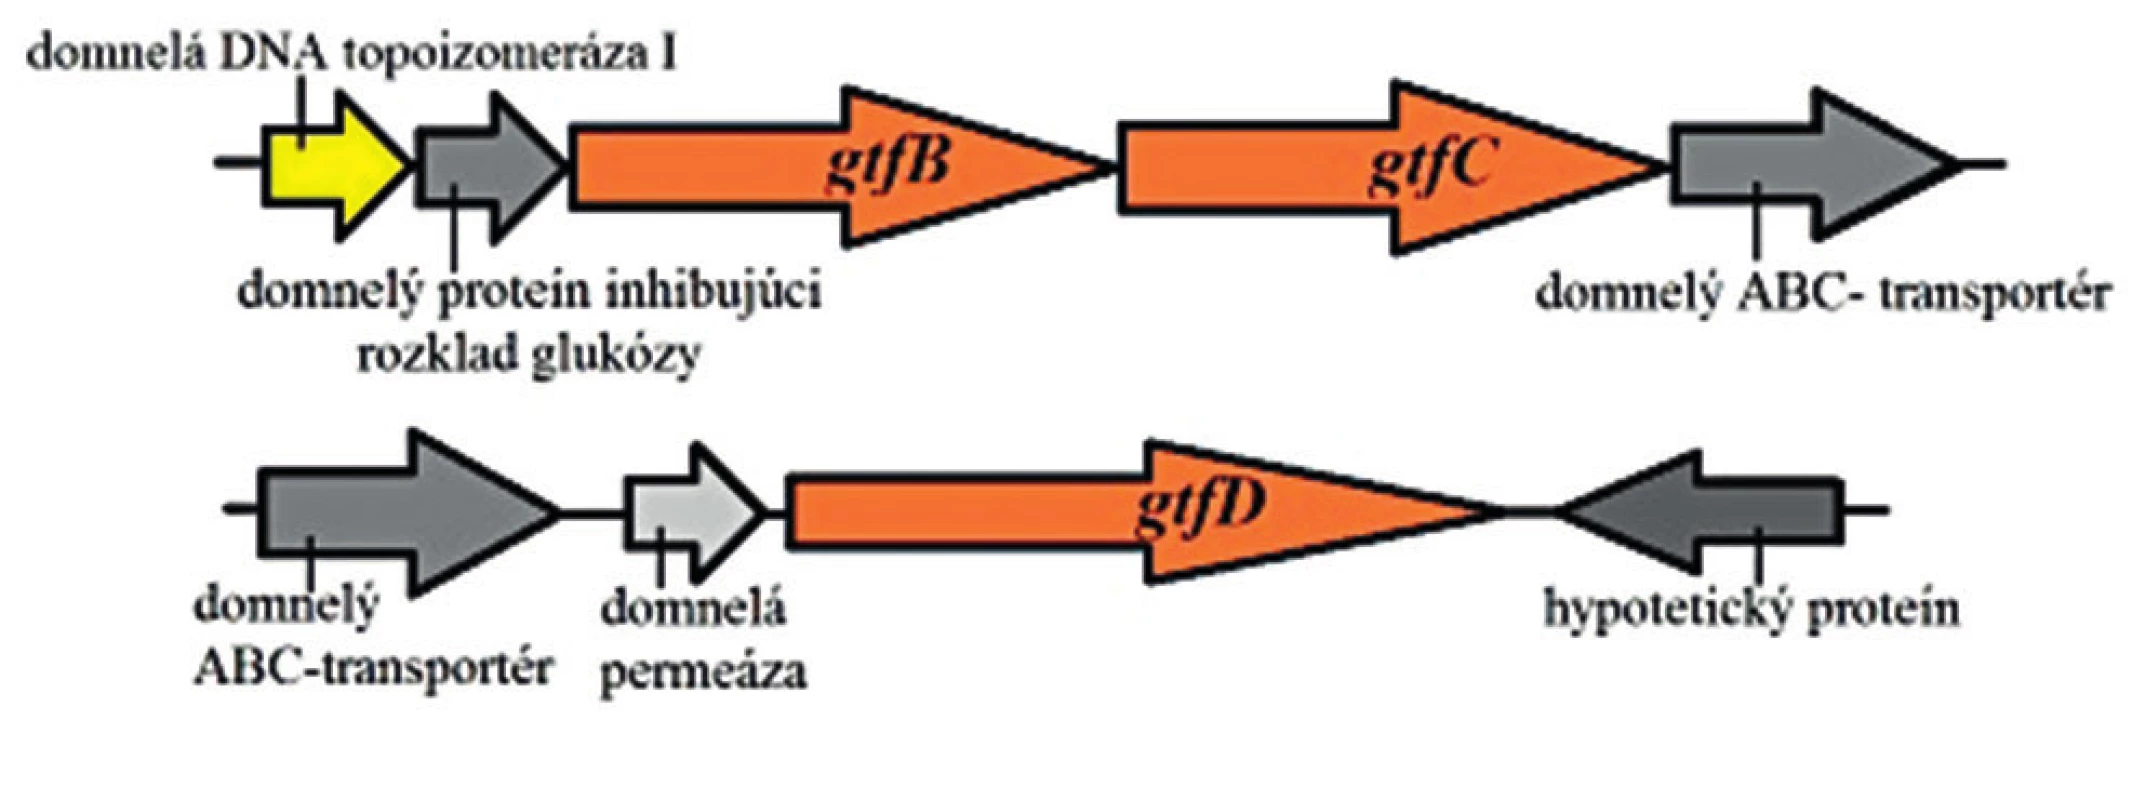 Mapa usporiadania génov gtf pri &lt;em&gt;S. mutans&lt;/em&gt;
Upravené podľa Hoshino et al. 2012 [125]
Figure 2. Map of the architecture of gtf genes in &lt;em&gt;S. mutans&lt;/em&gt;
Adapted from Hoshino et al., 2012 [125]